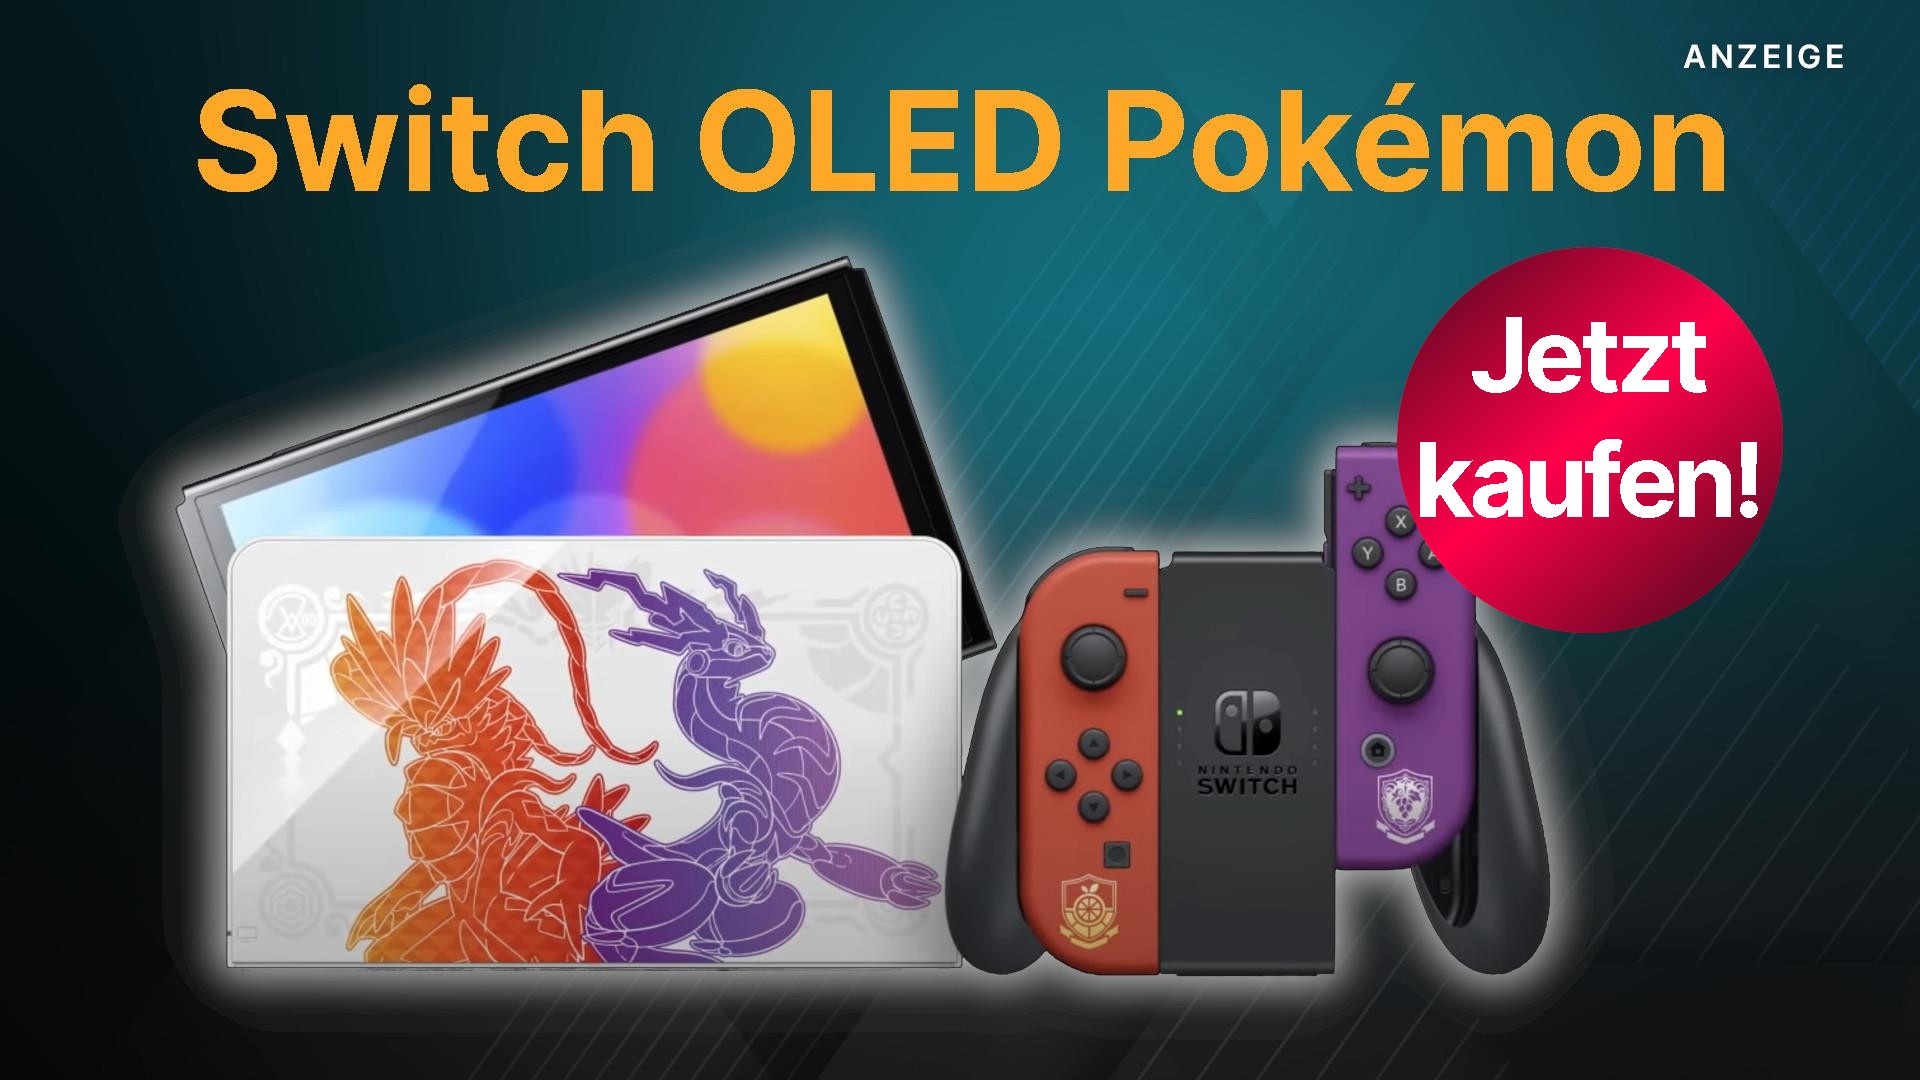 Switch OLED: Pokémon Purpur & jetzt Edition Amazon Karmesin Special kaufen bei